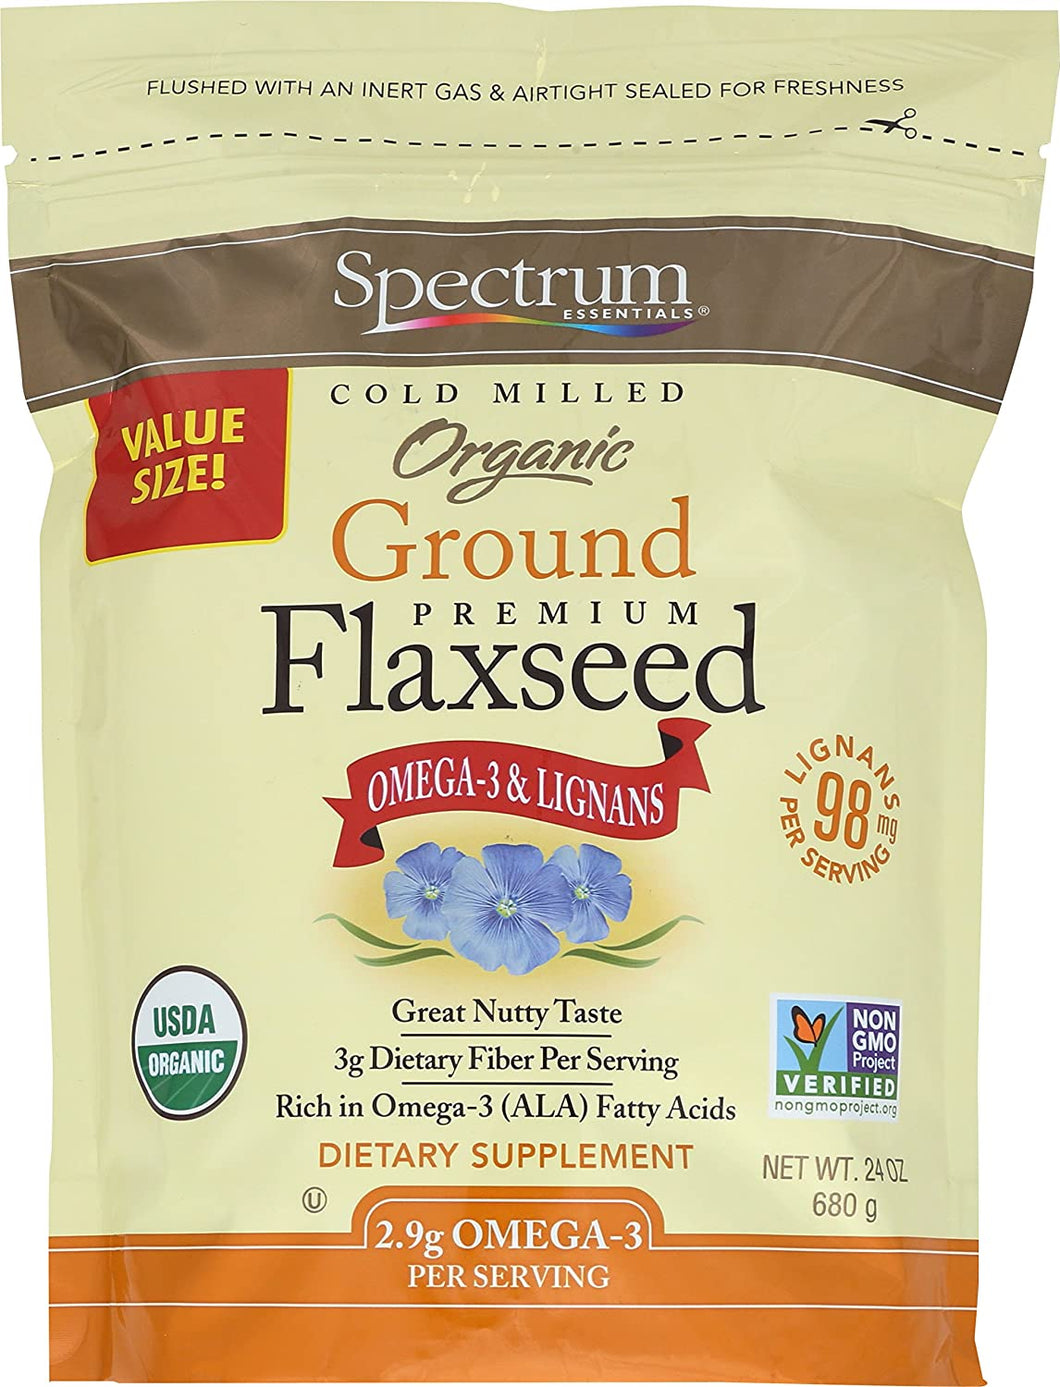 Spectrum, Organic Ground Premium Flaxseed 24oz